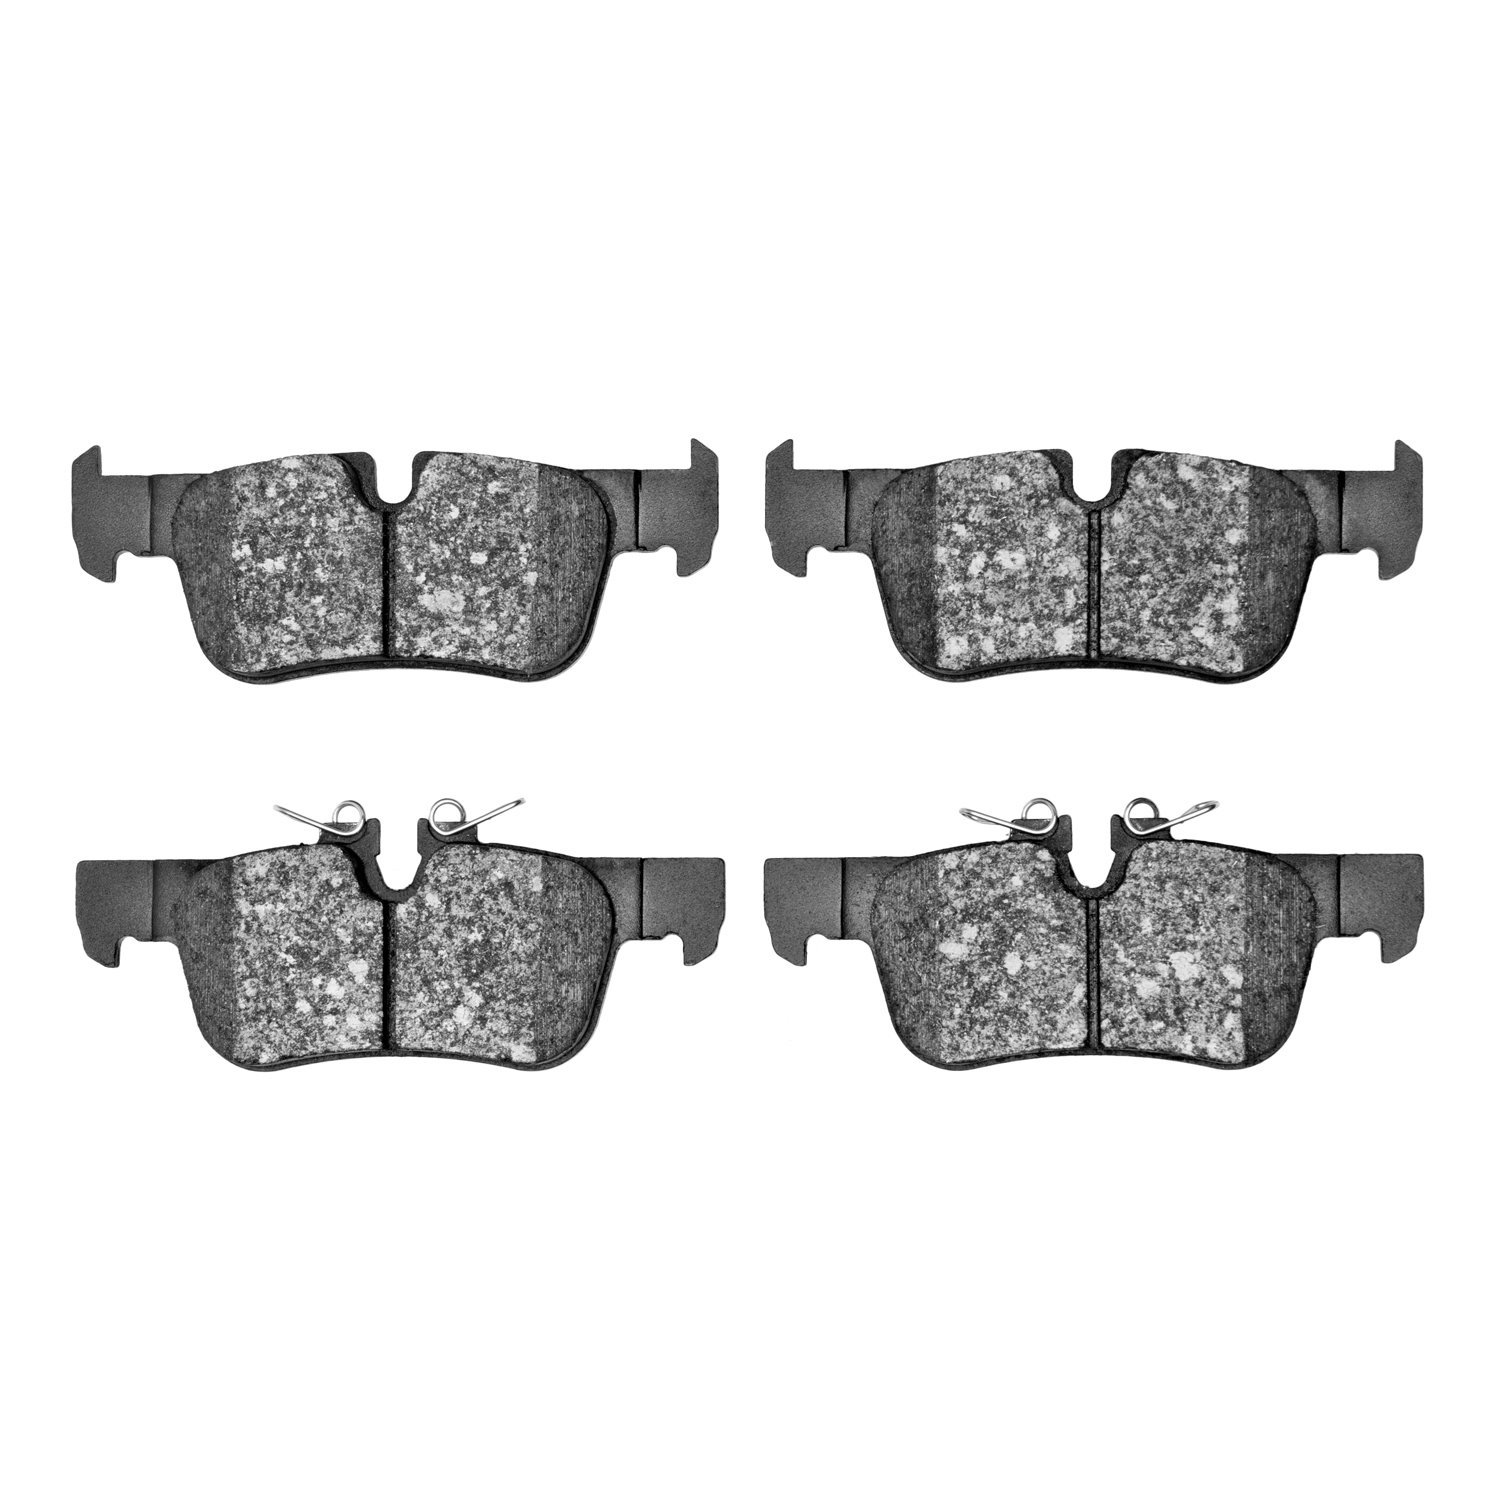 Ceramic Brake Pads, Fits Select Fits Multiple Makes/Models, Position: Rear